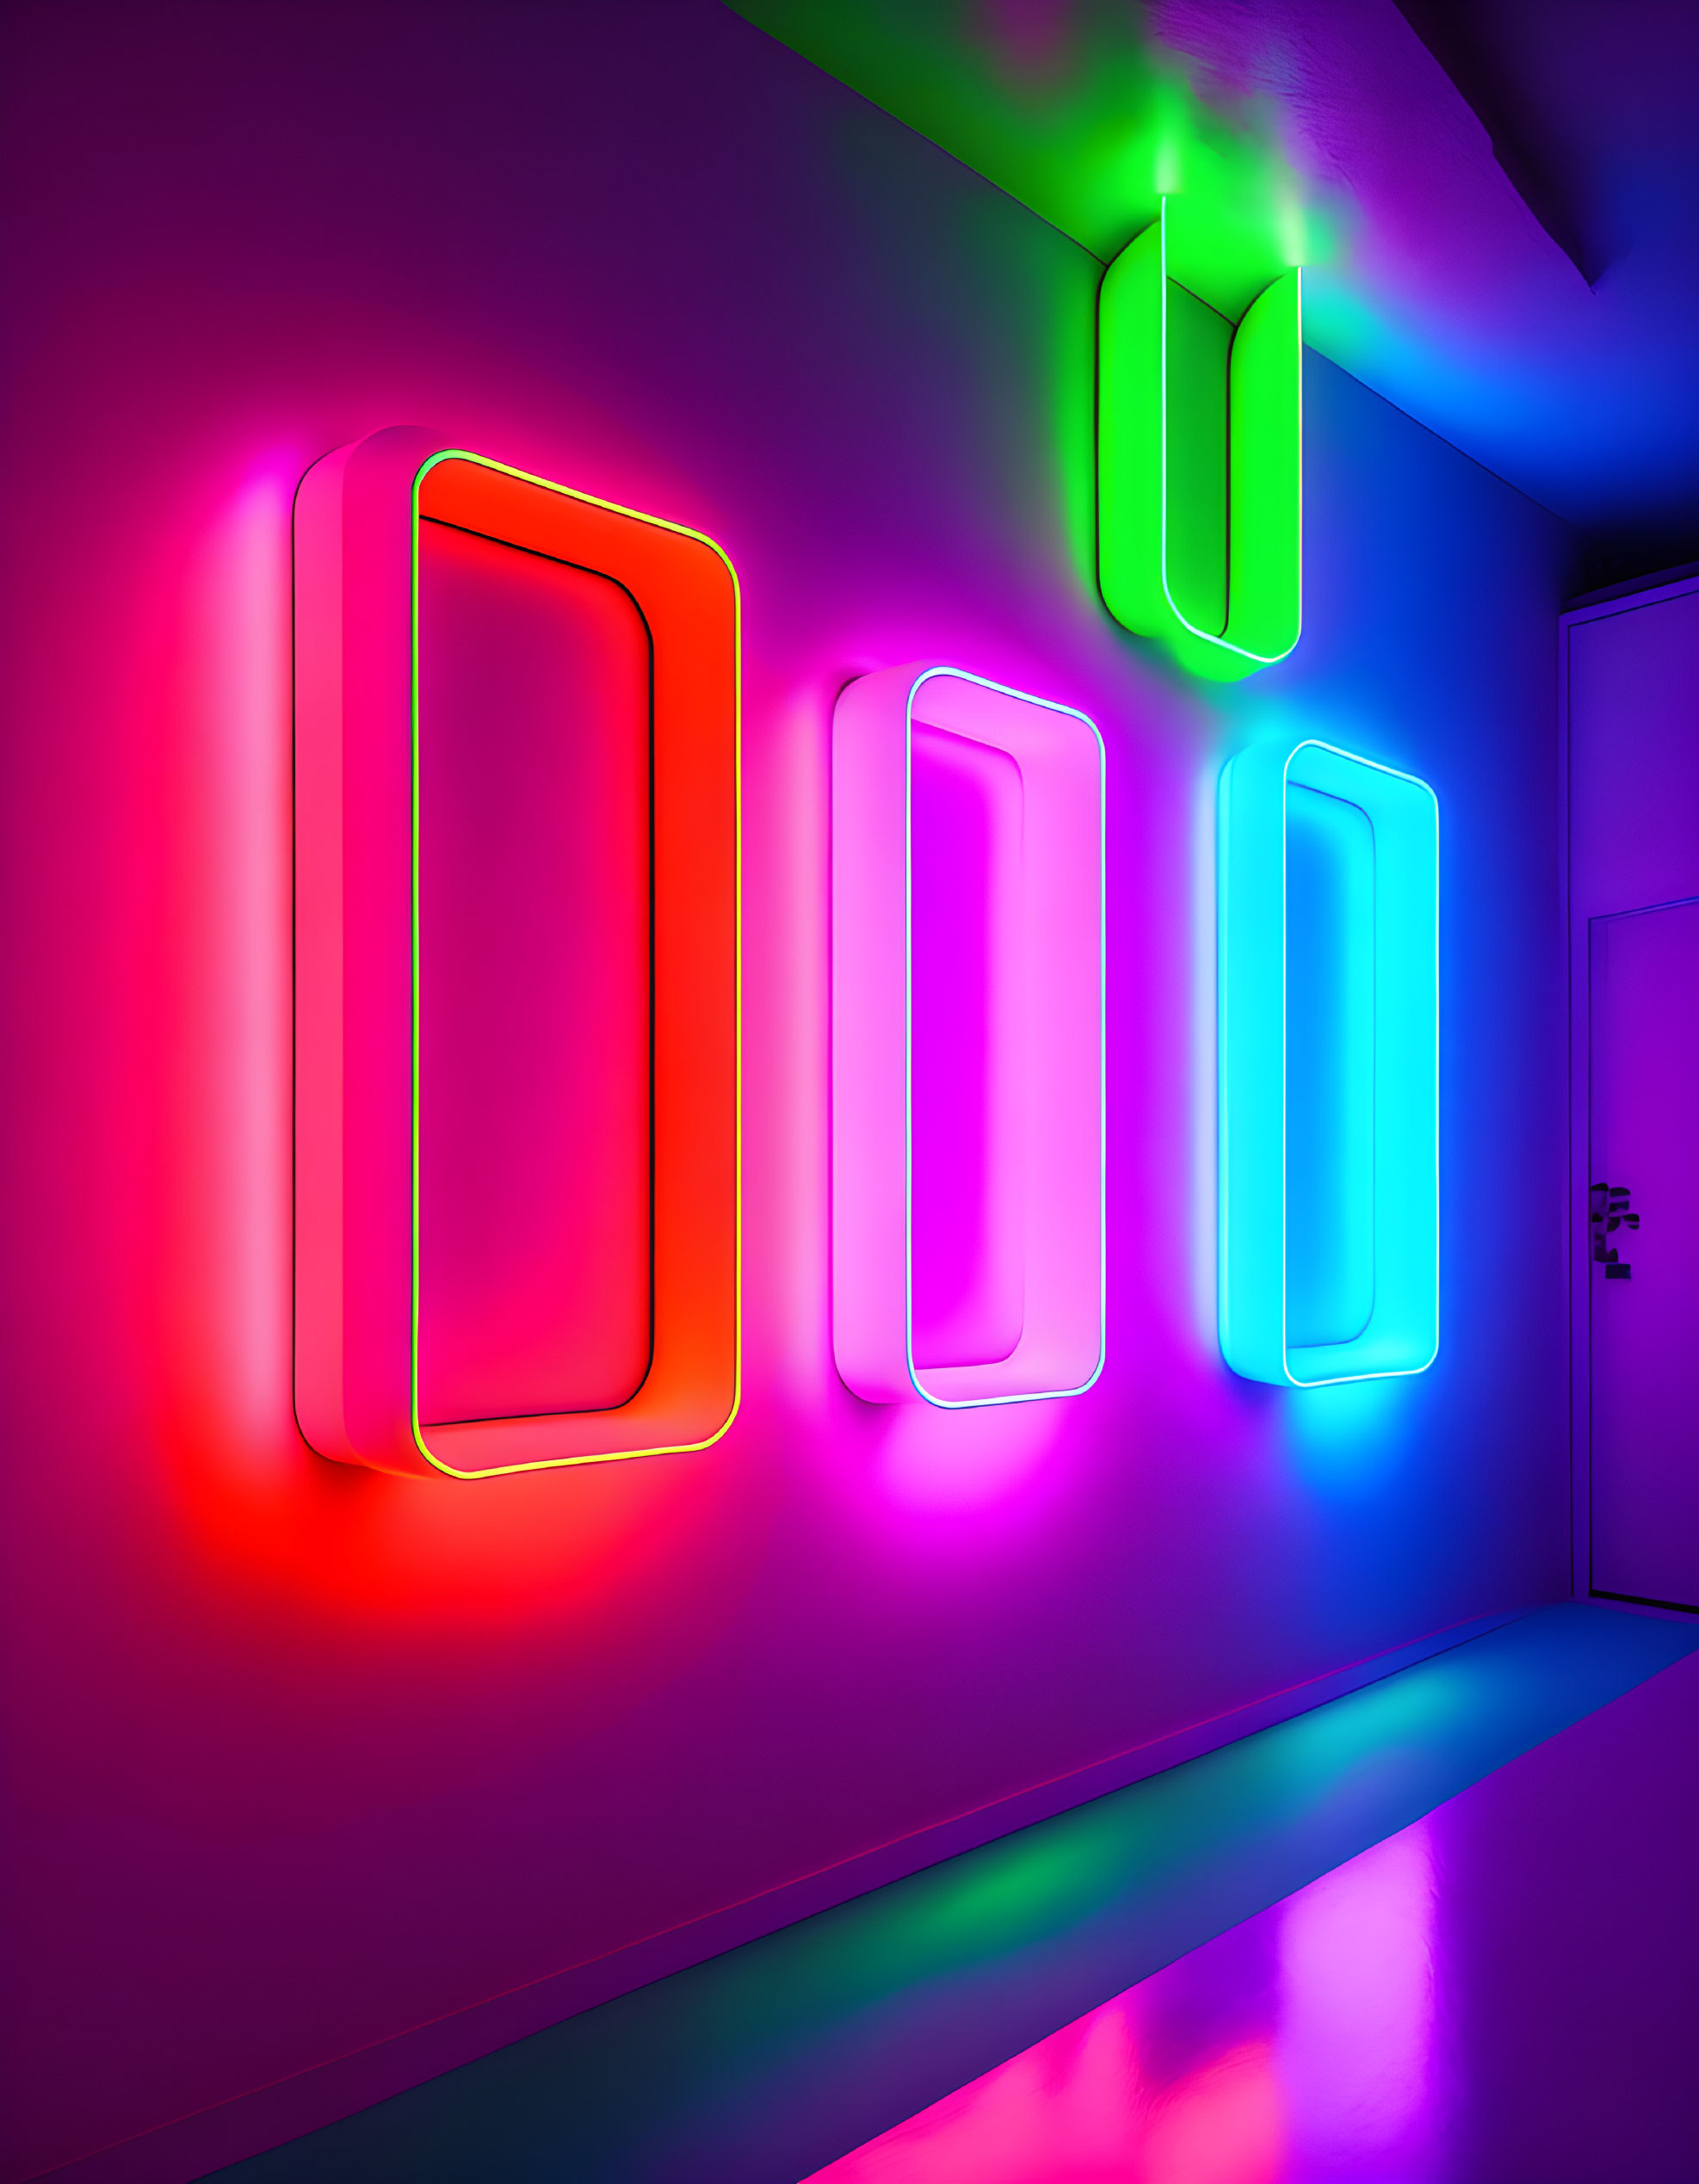 Colorful Neon Light Installations Illuminate Vibrant Corridor